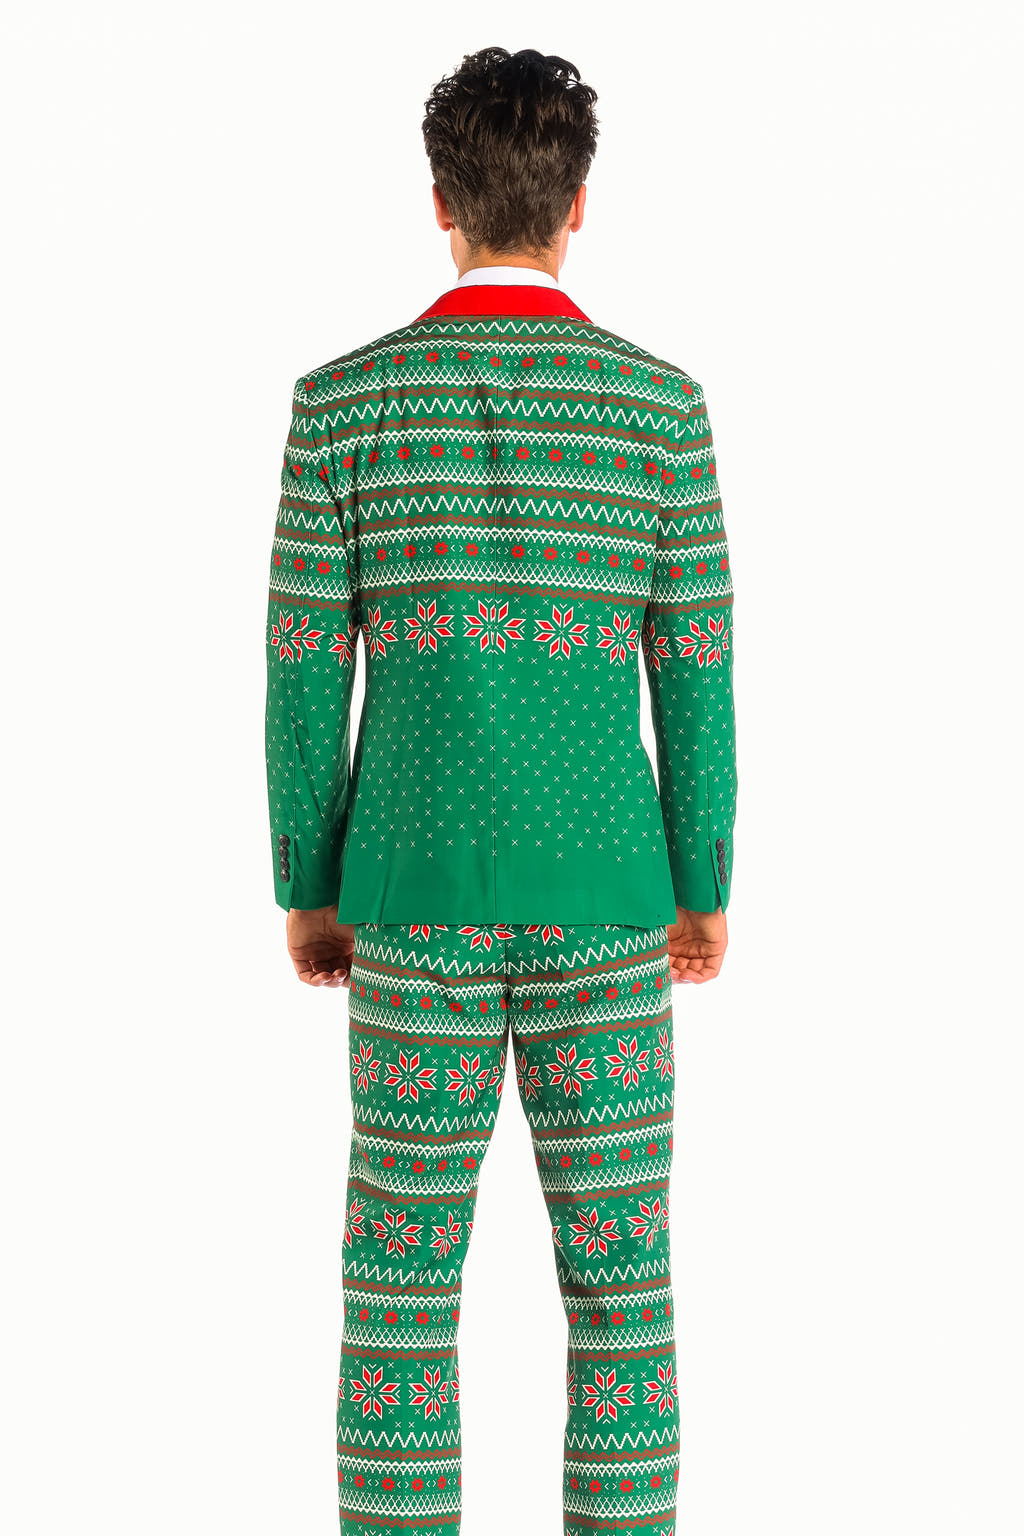 A man in The Kris Kringle Green Fair Isle Christmas Suit.